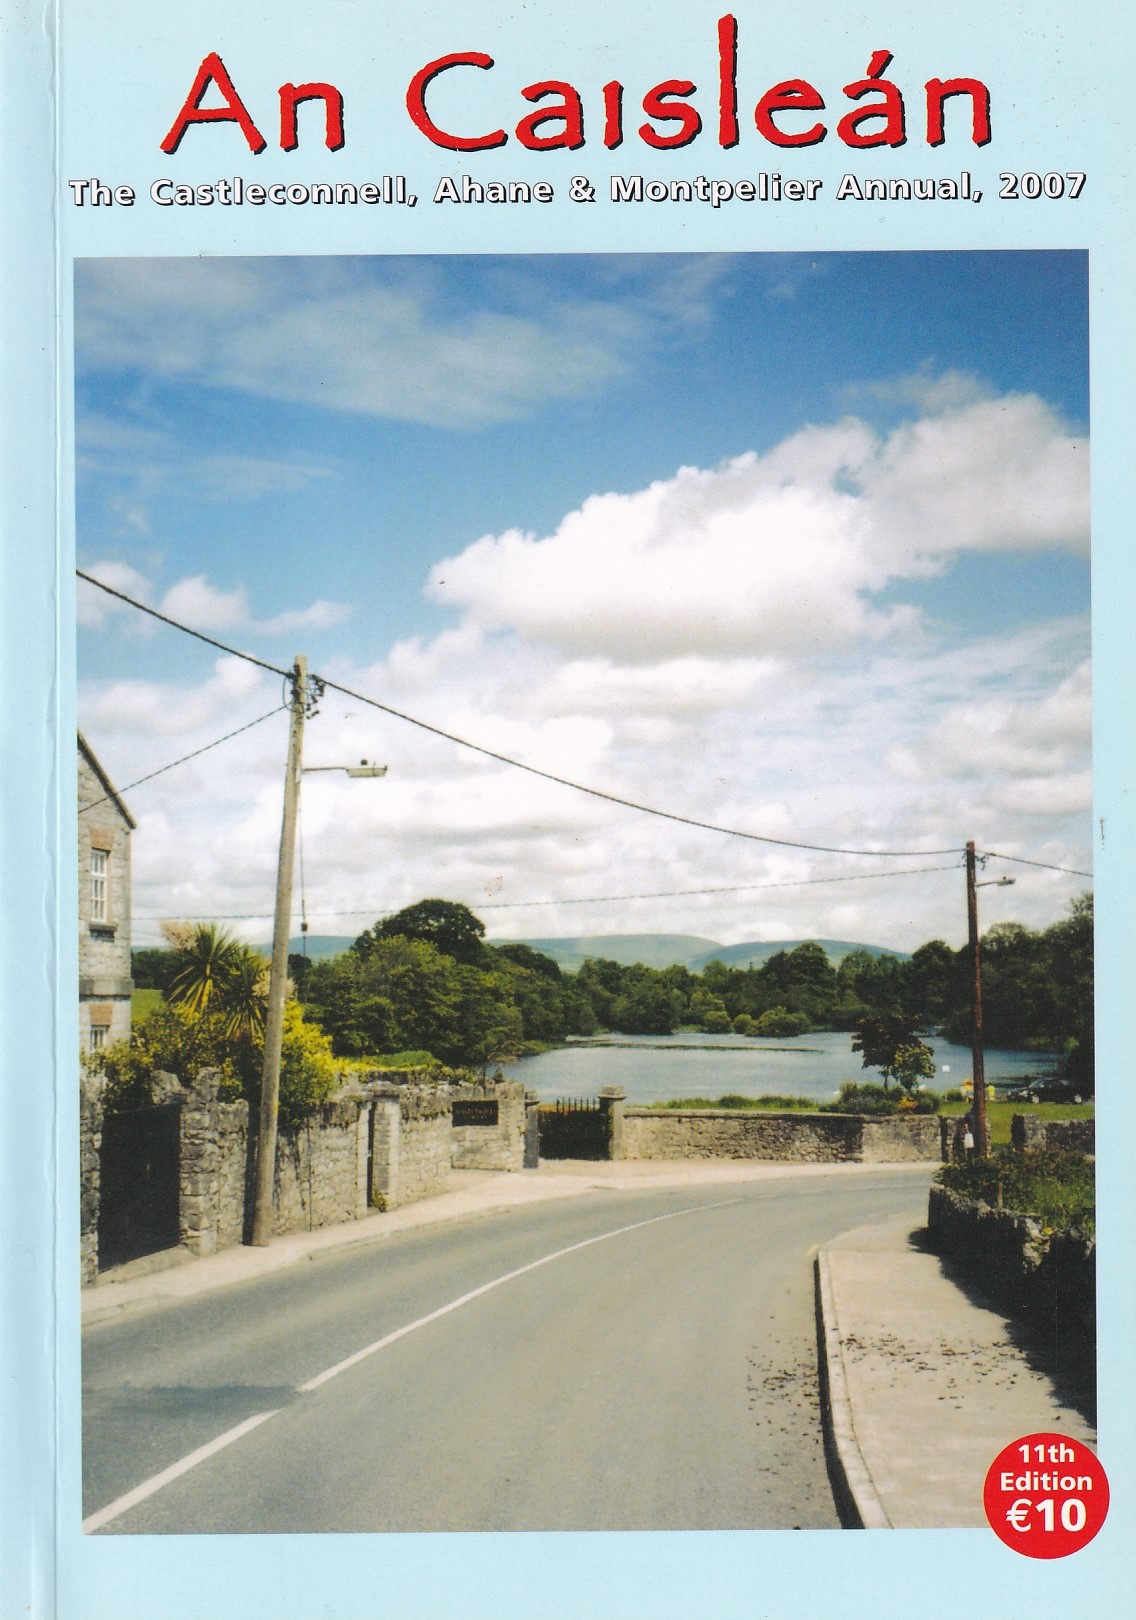 An Caisleán: The Castleconnell, Ahane & Montpelier Annual, 2007 by Various